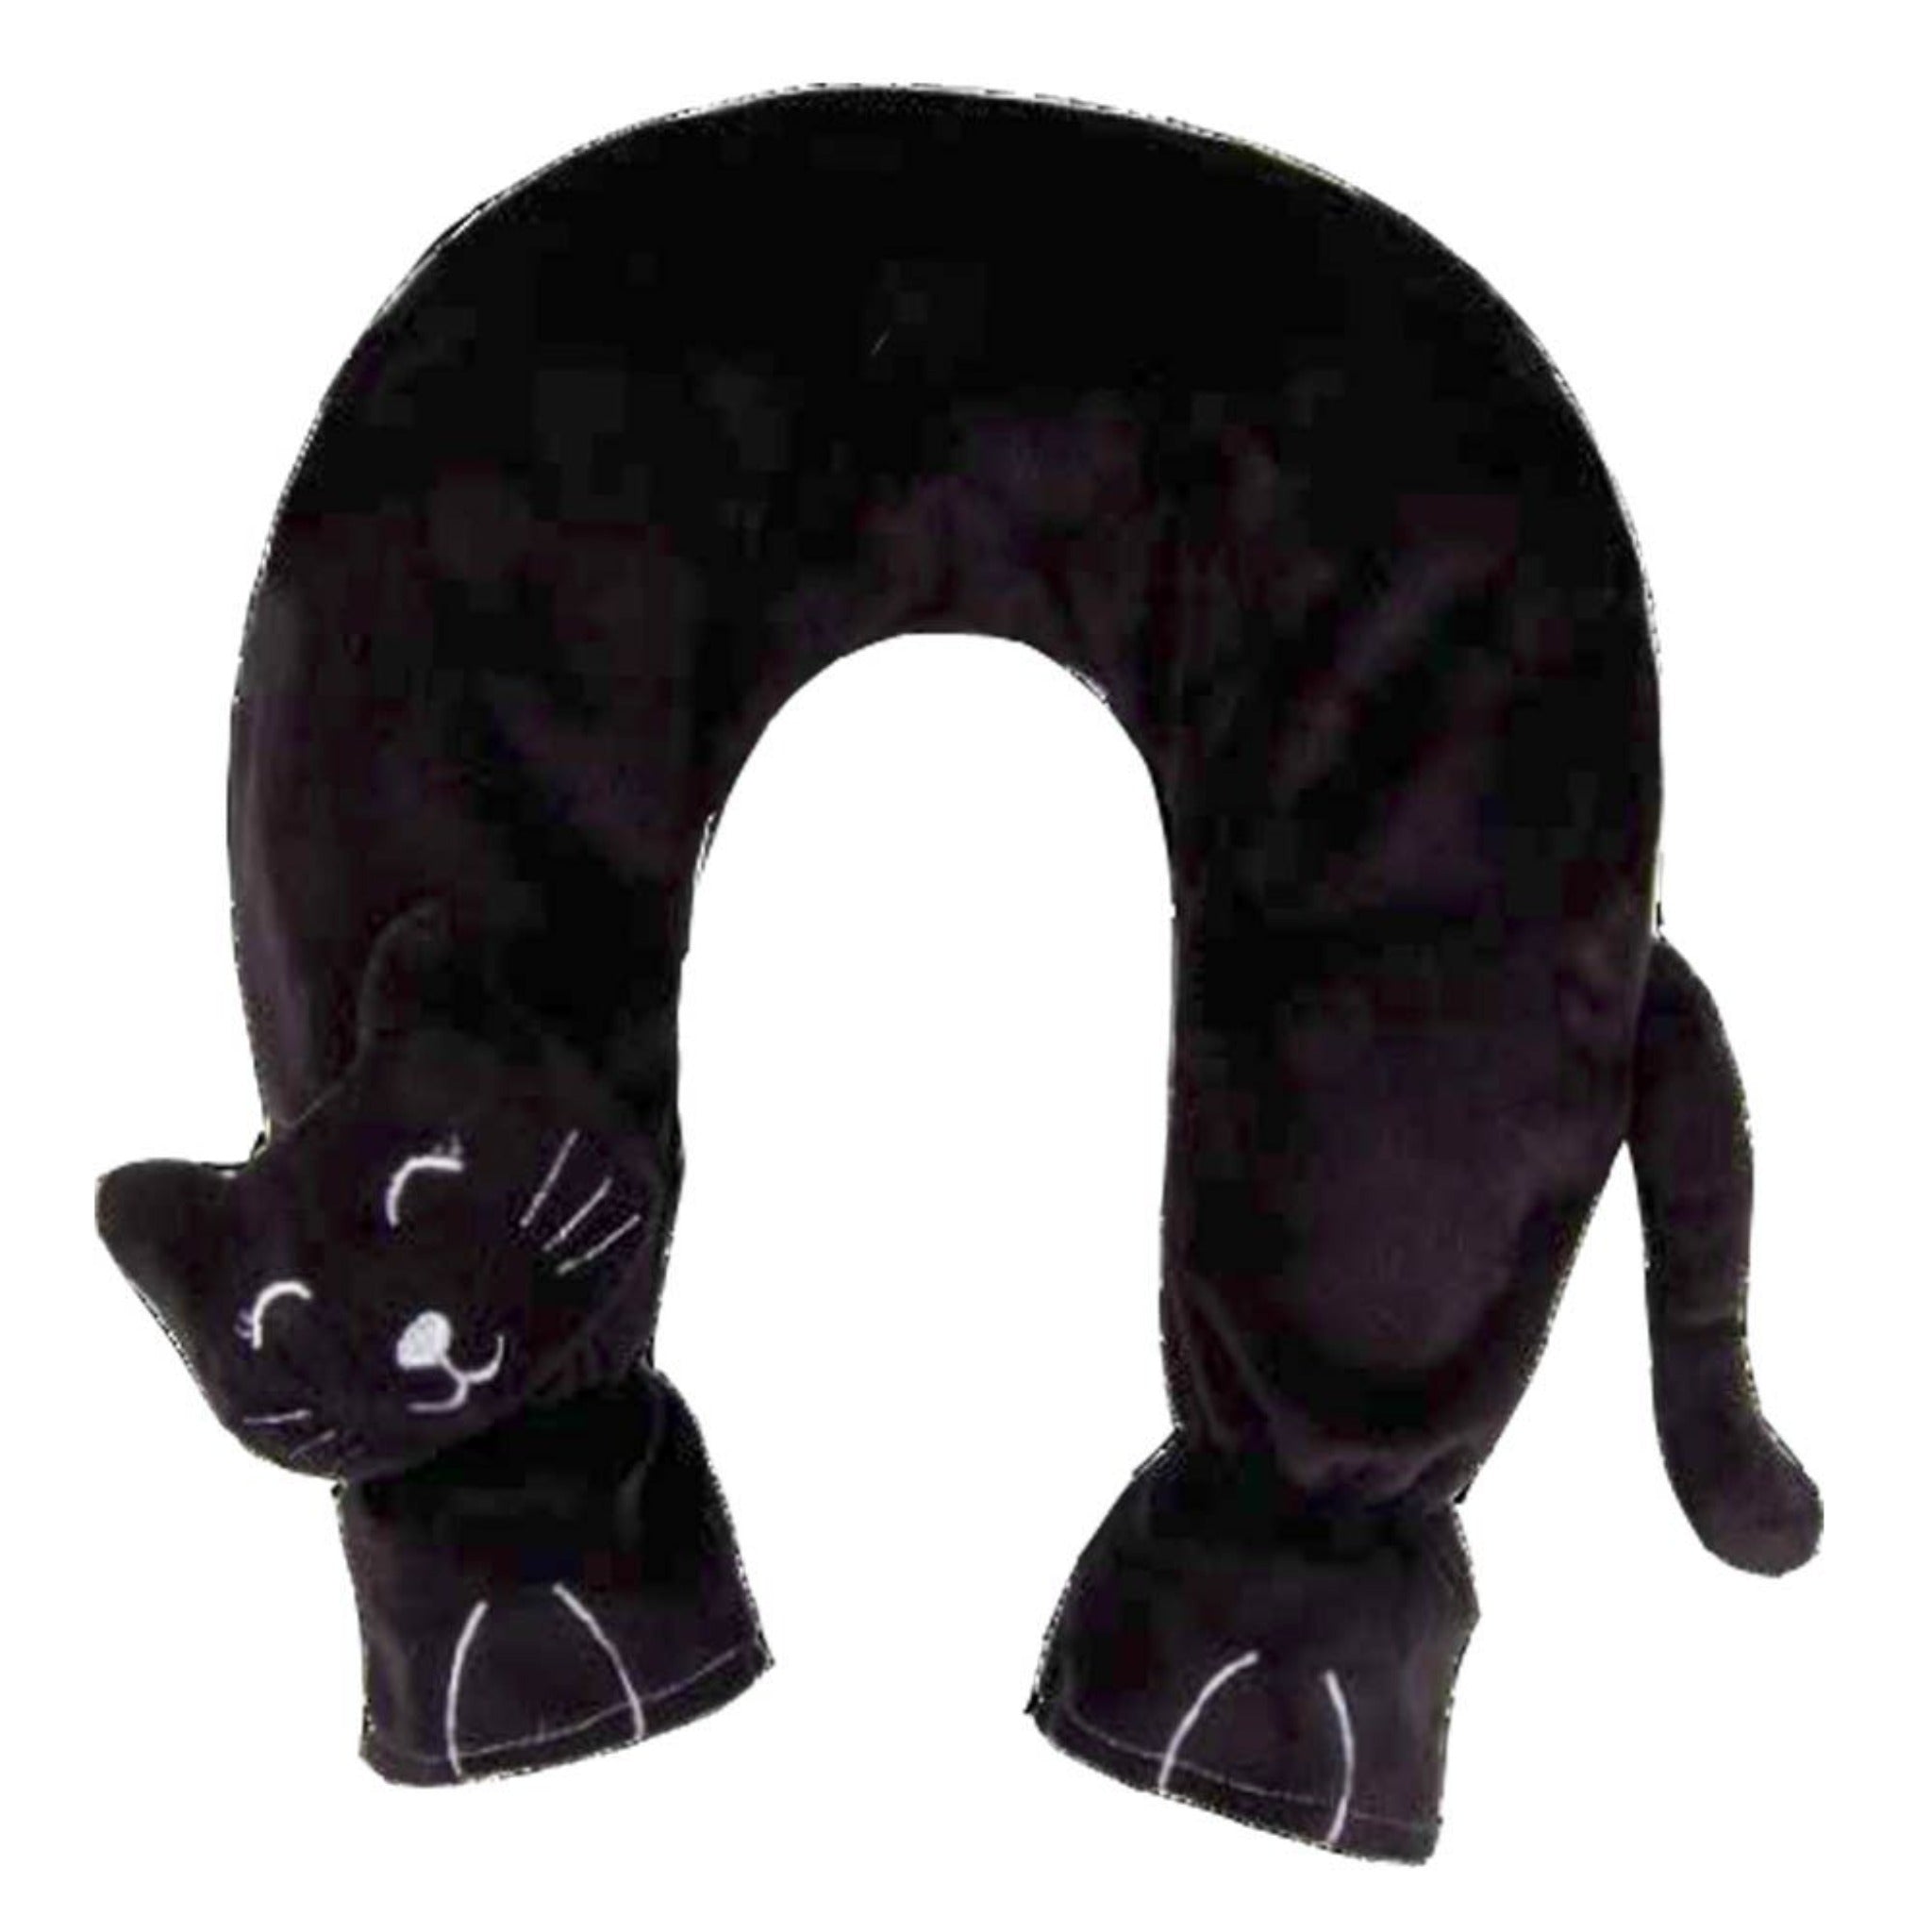 Neck Hot Water Bottle with Black Cat Fleece Cover